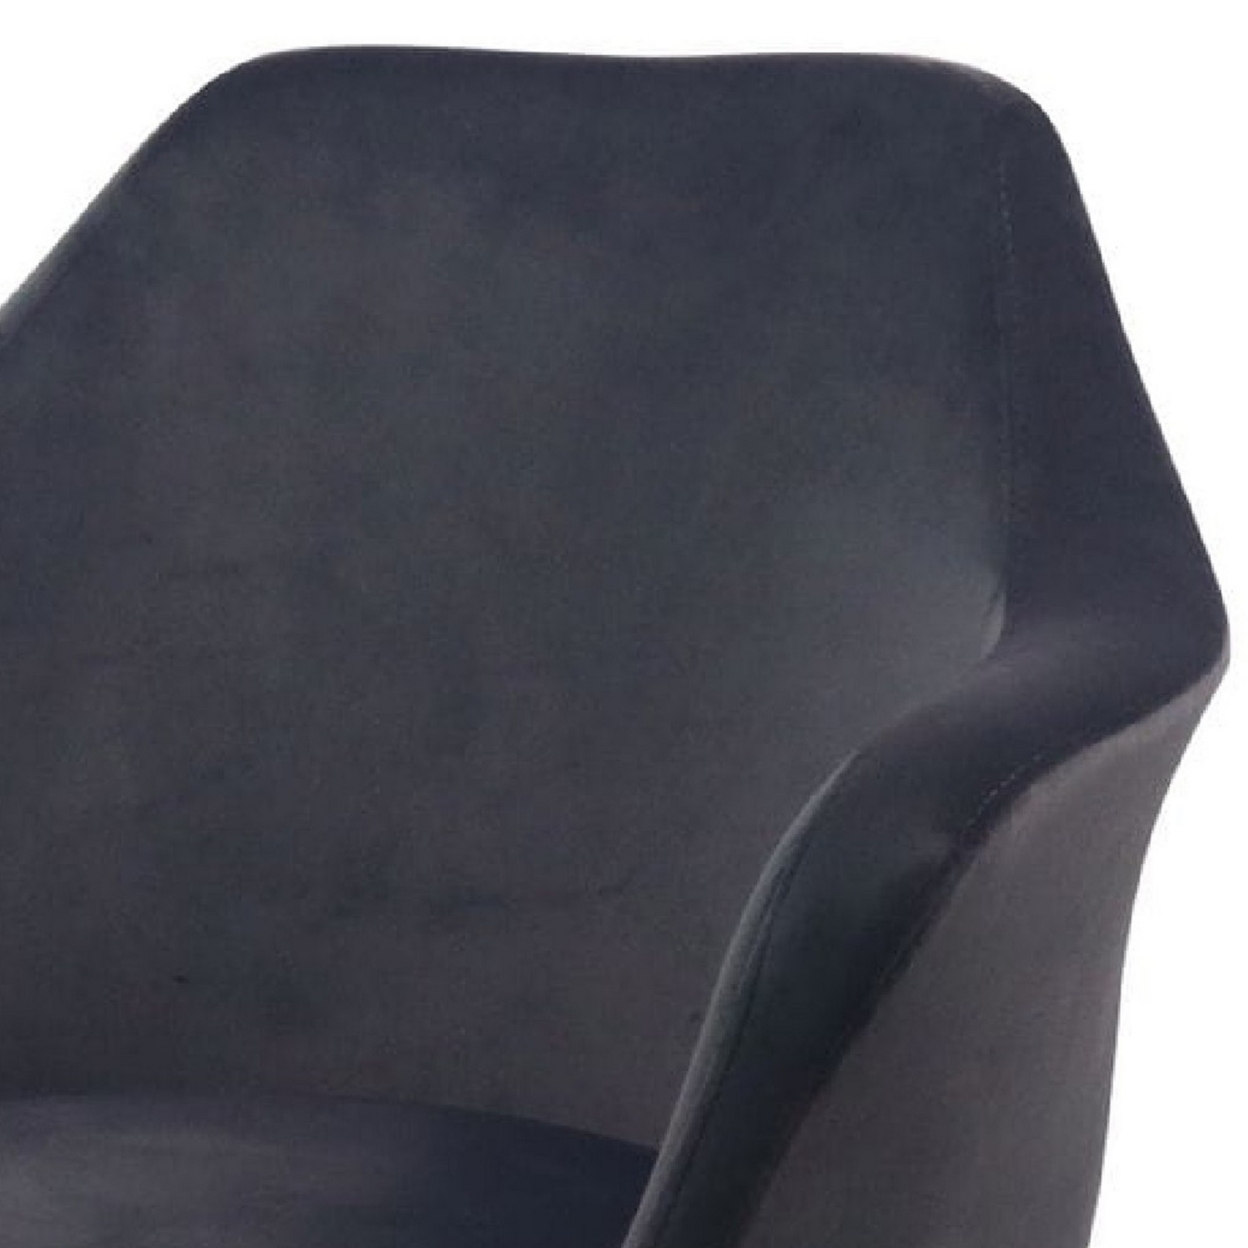 Cid 18 Inch Modern Dining Chair, Grey Velvet, Metal Legs, Bucket Design- Saltoro Sherpi